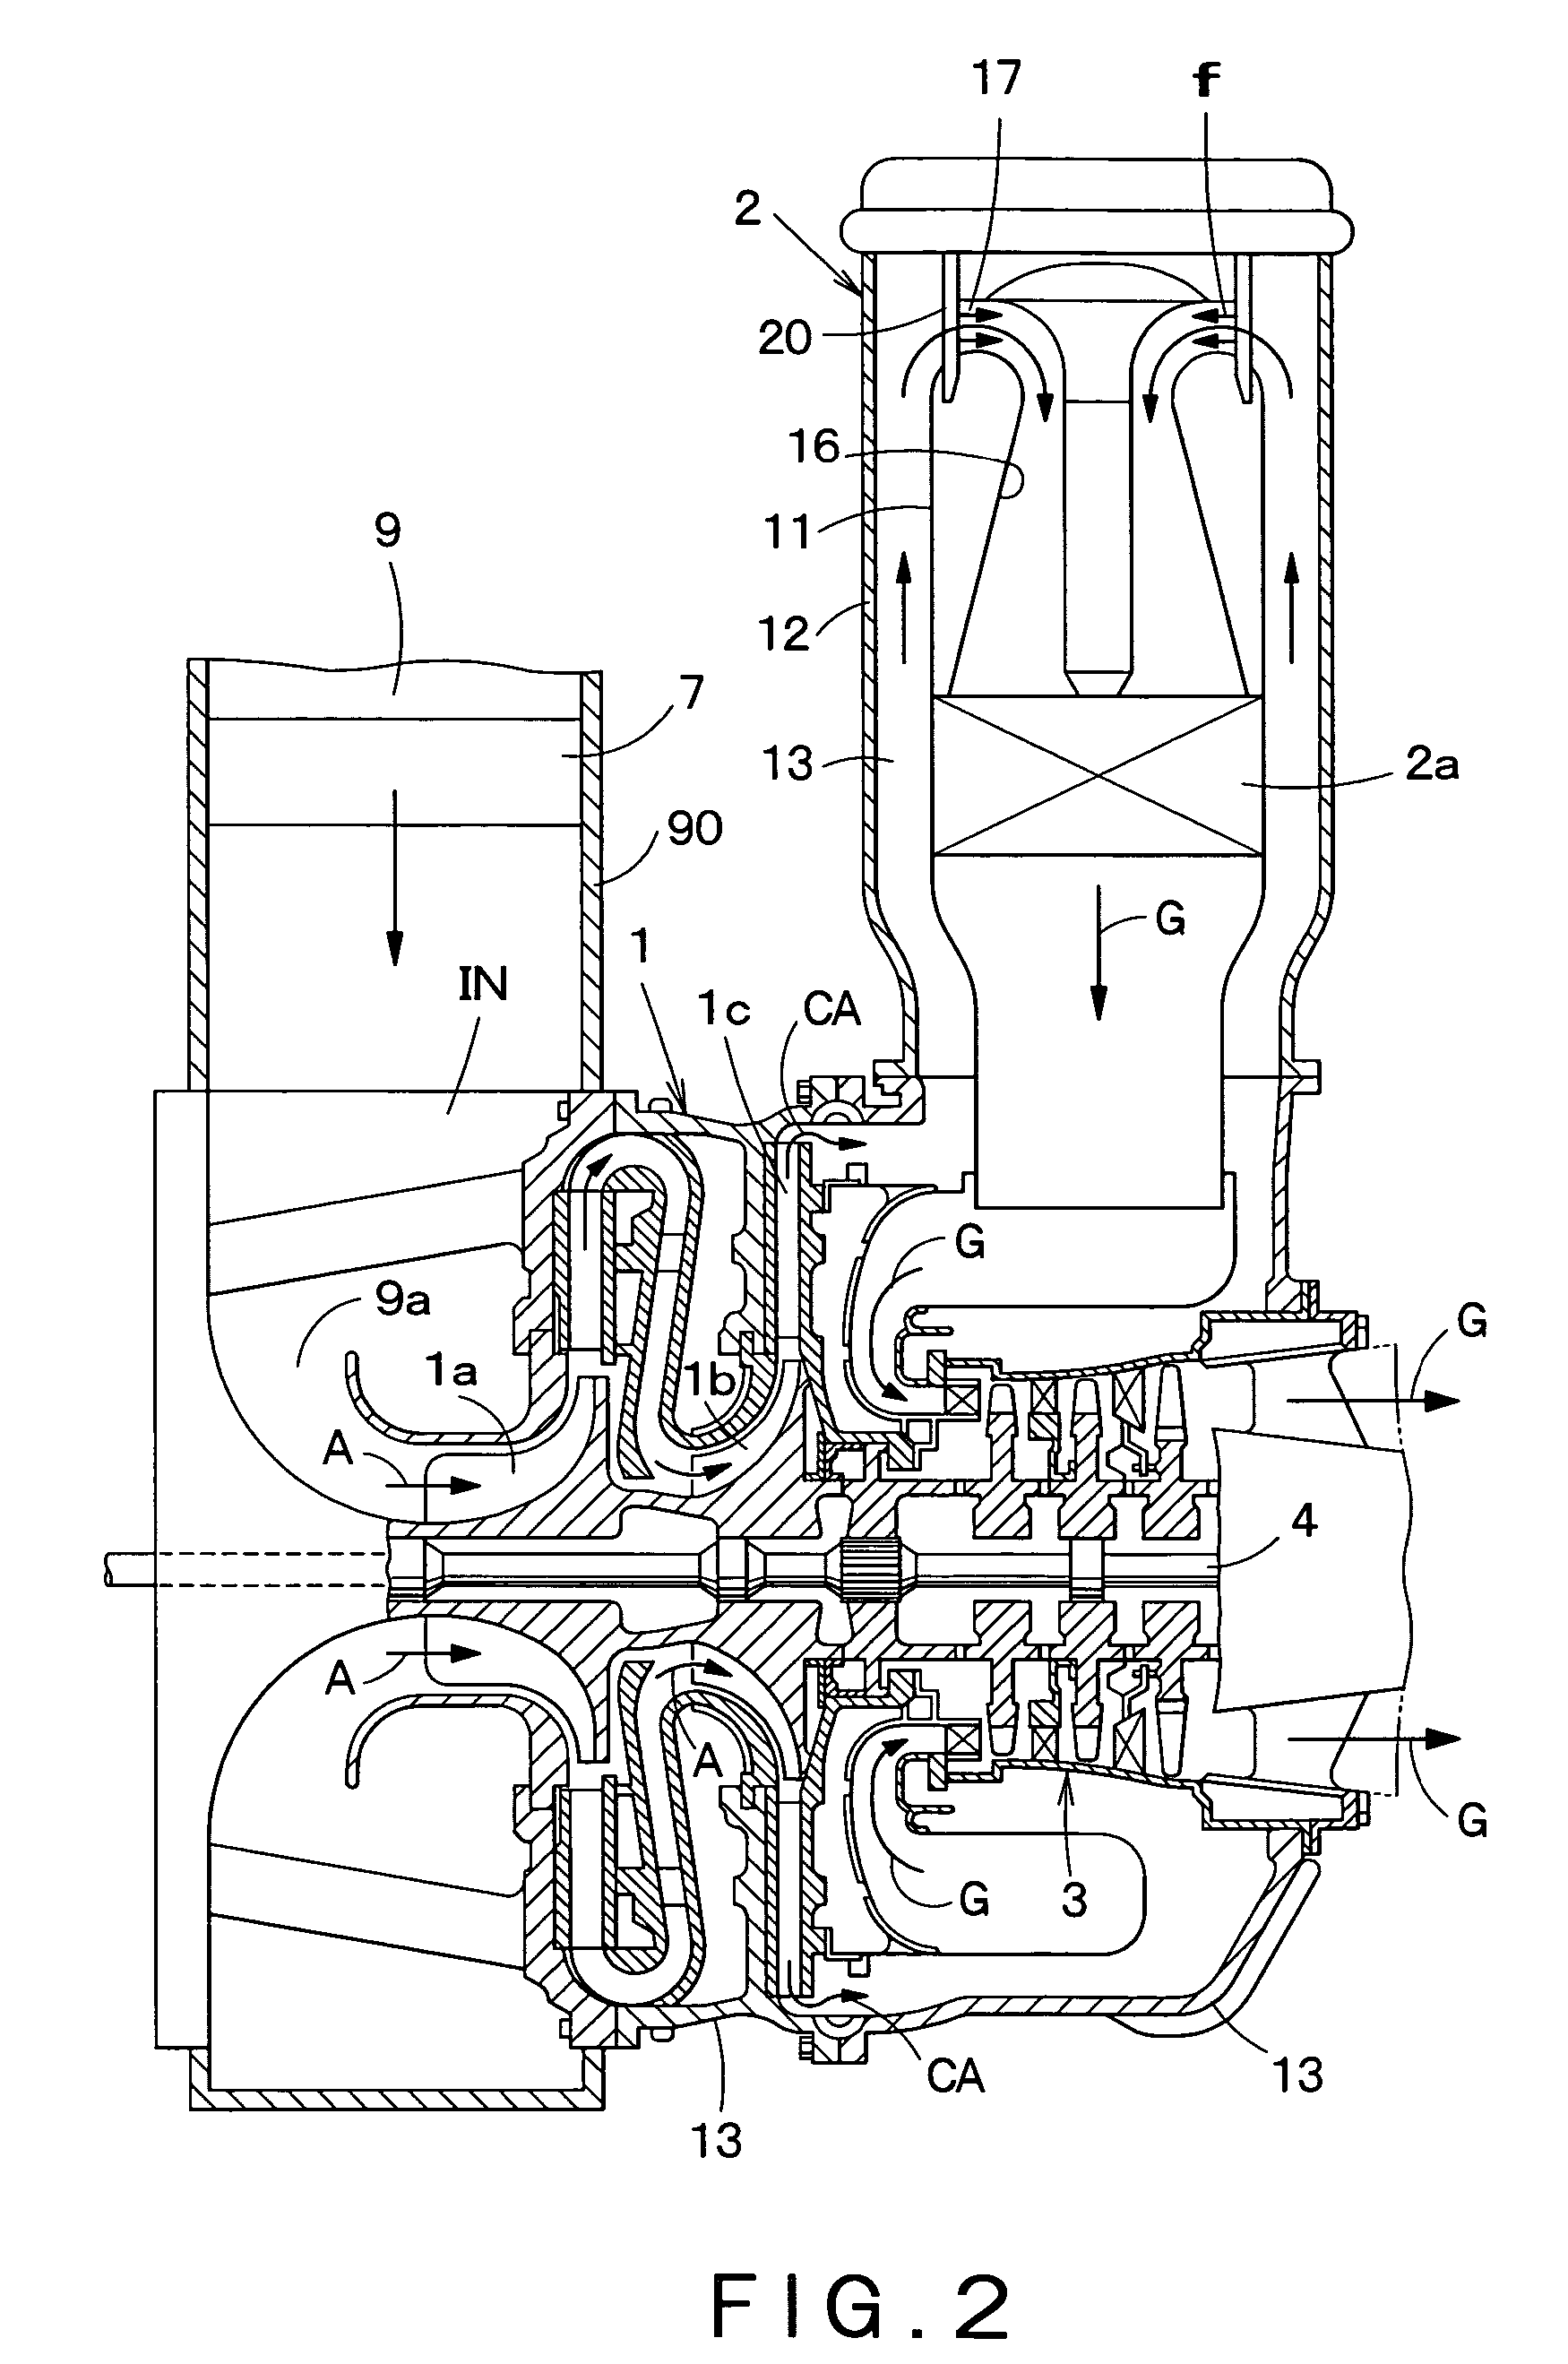 Gas turbine engine with intake air flow control mechanism